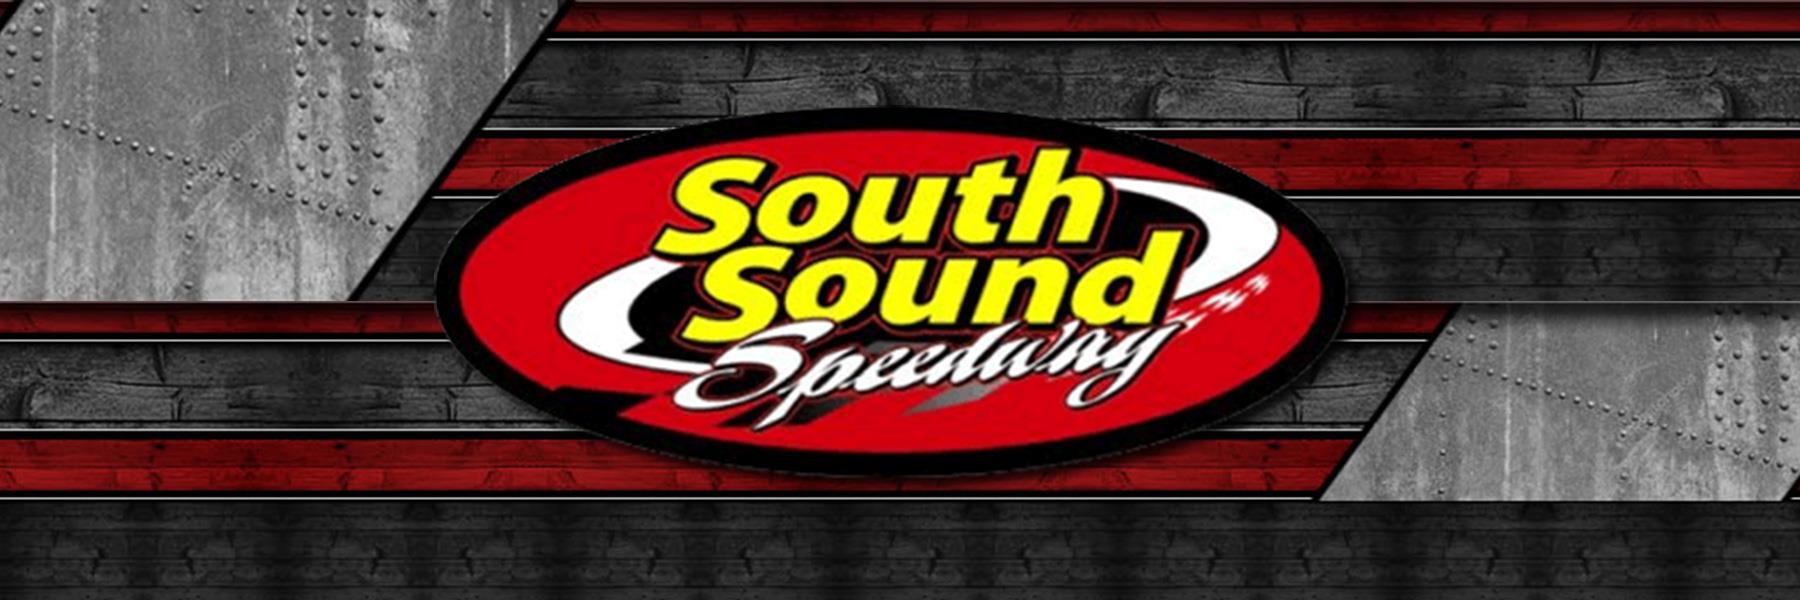 6/25/2022 - South Sound Speedway